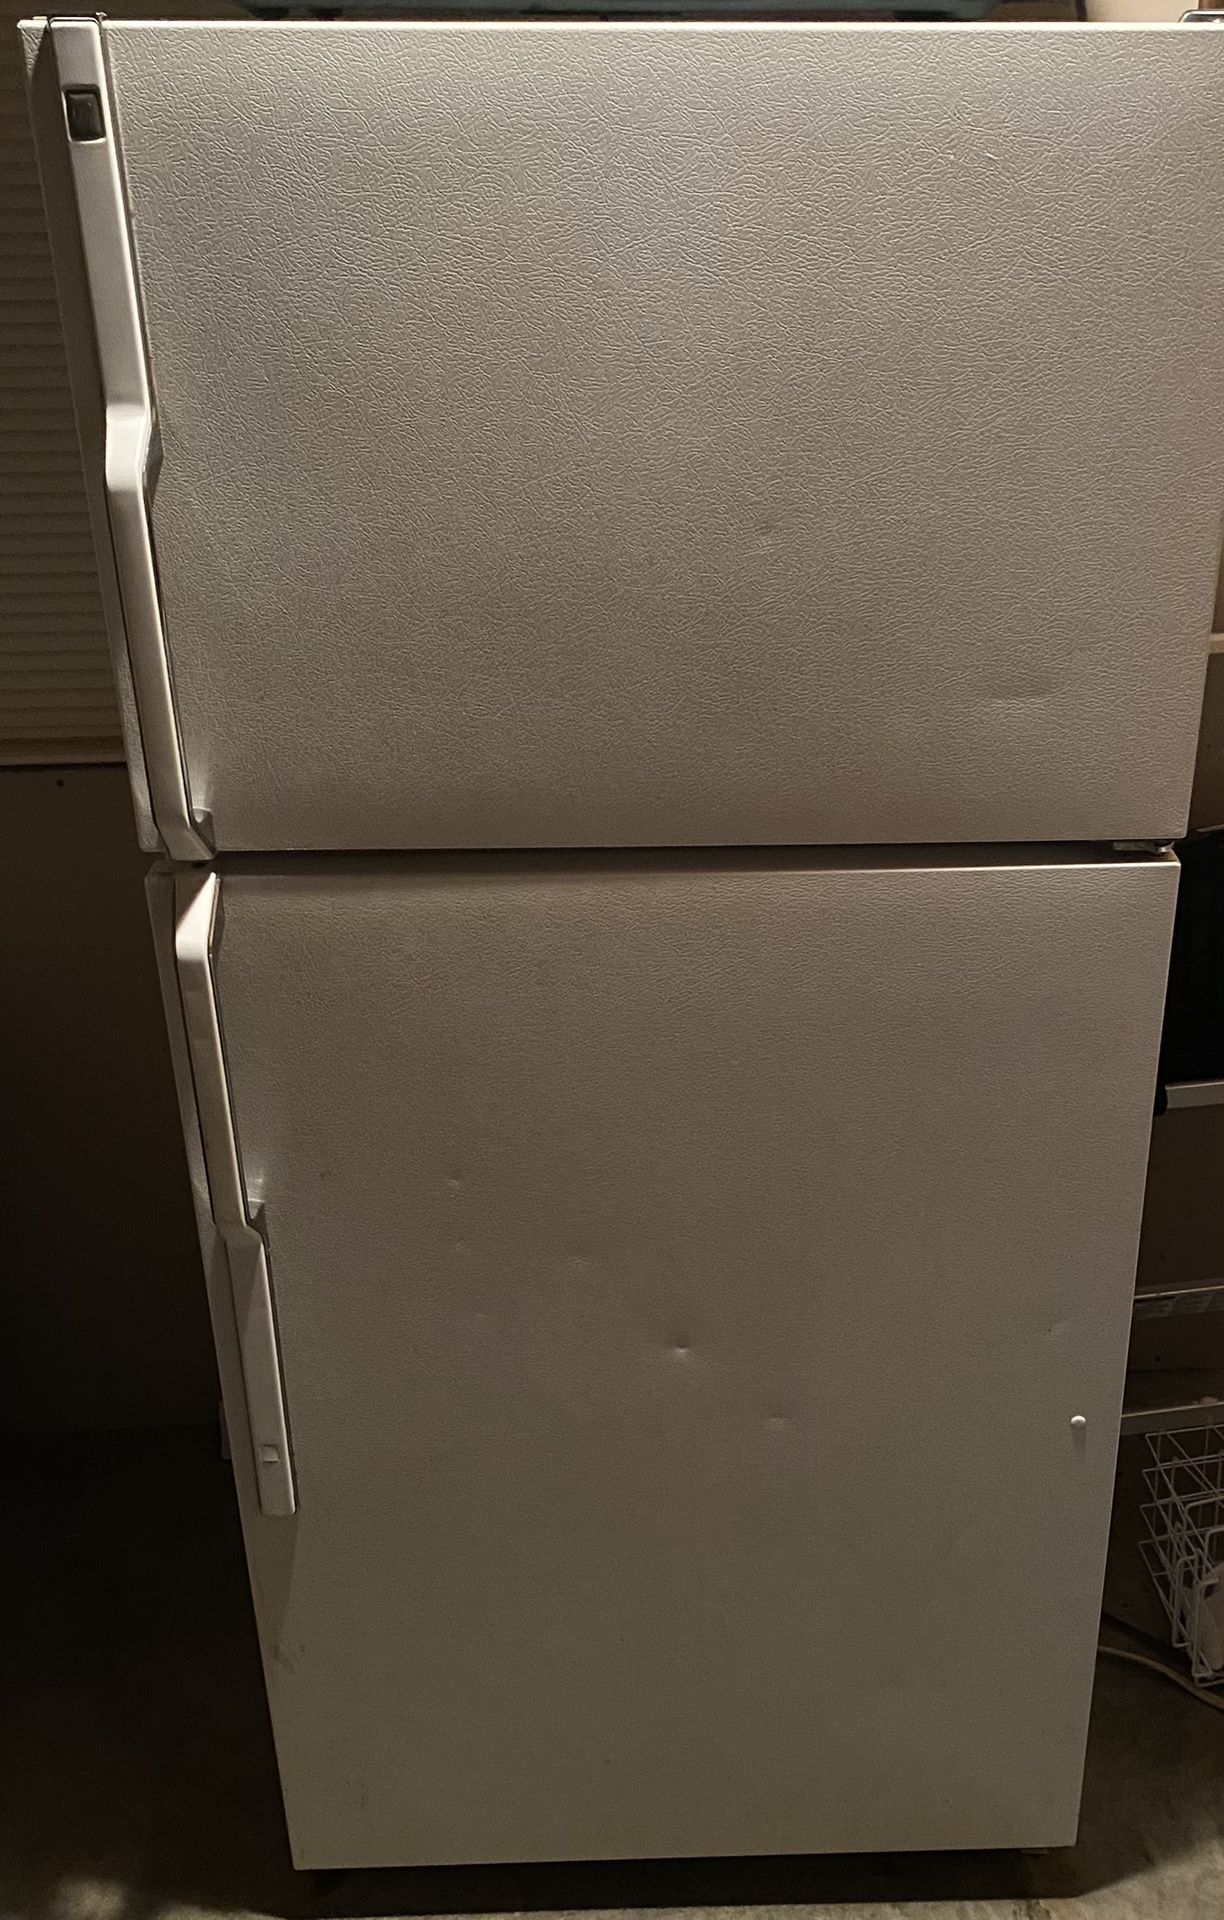 GE 21.9 cu ft top freezer/refrigerator